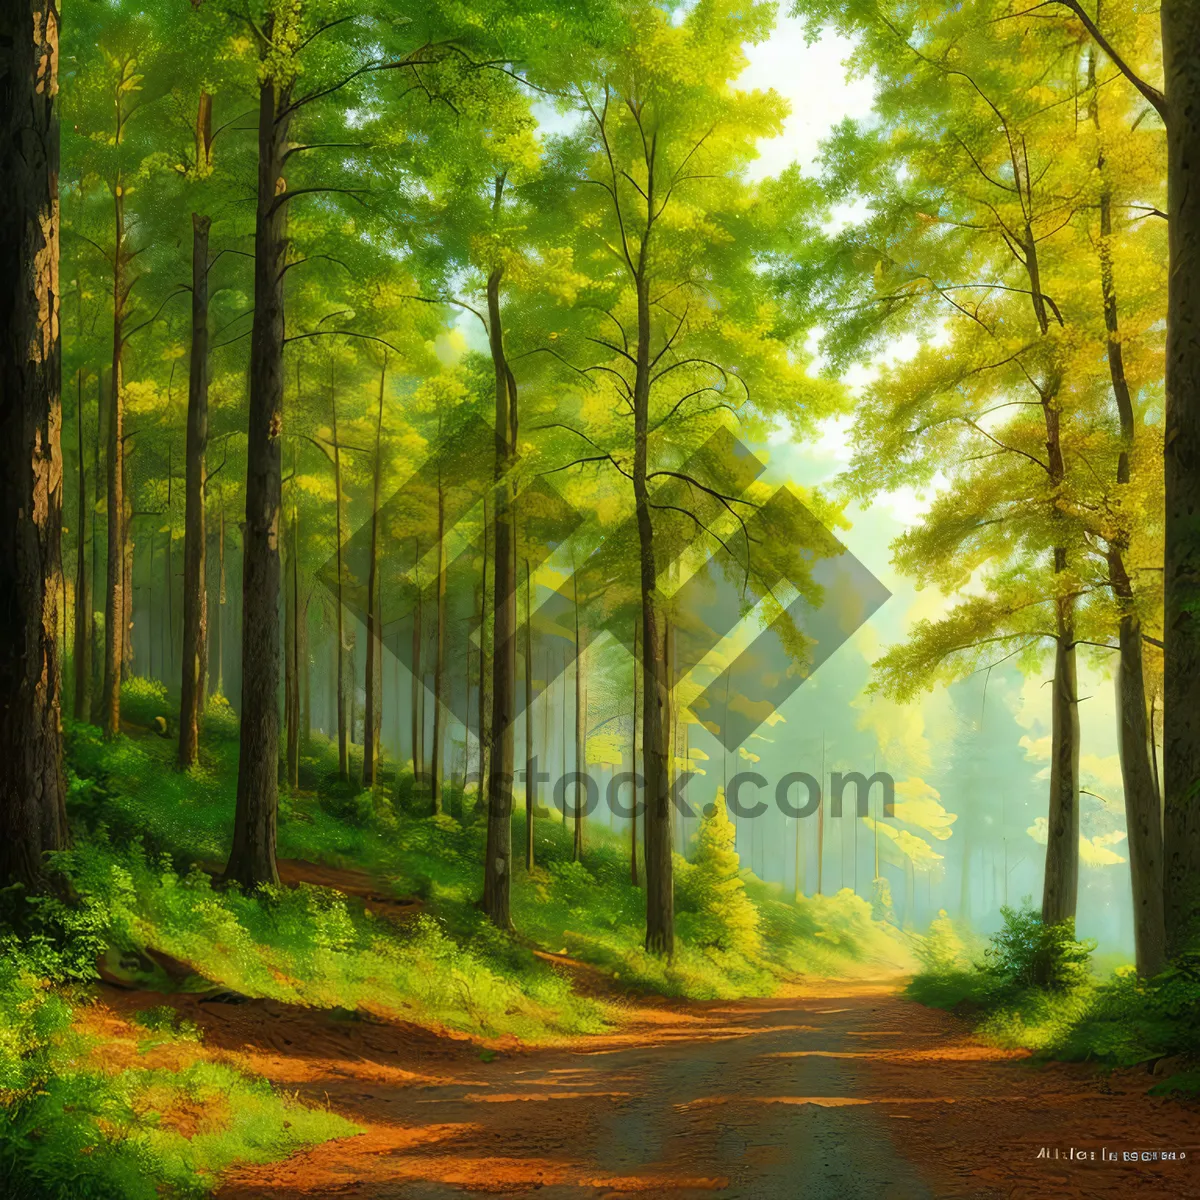 Picture of Mystic Autumn Pathway through Sunlit Woods